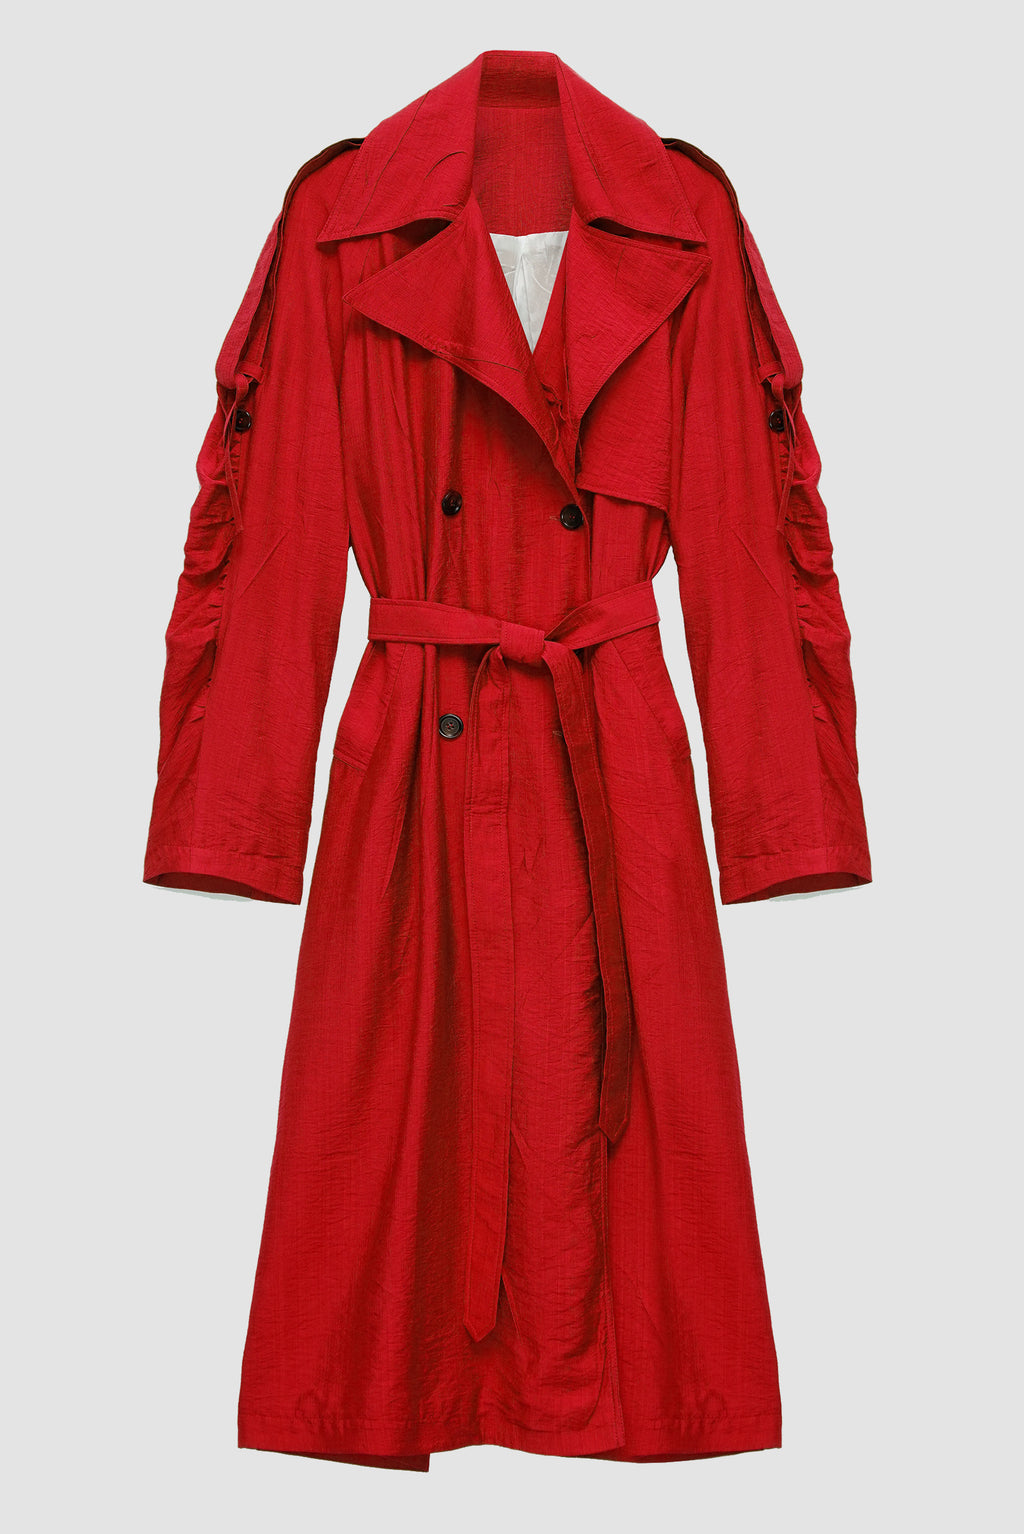 'Art Director' Trench Coat in Red